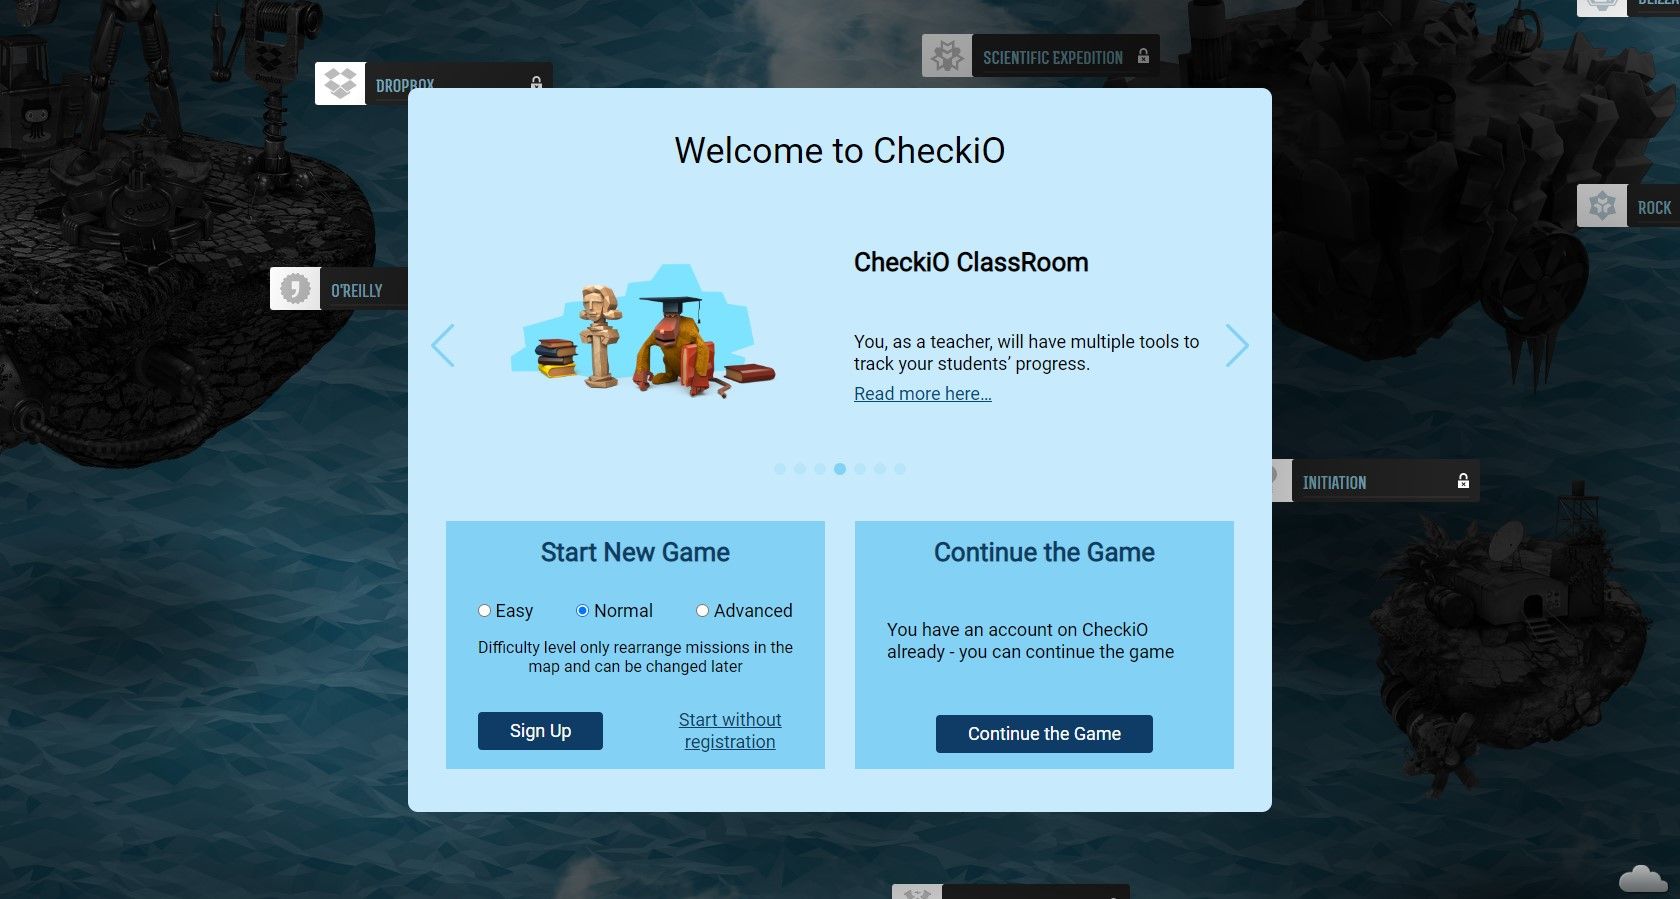 CheckiO website interface